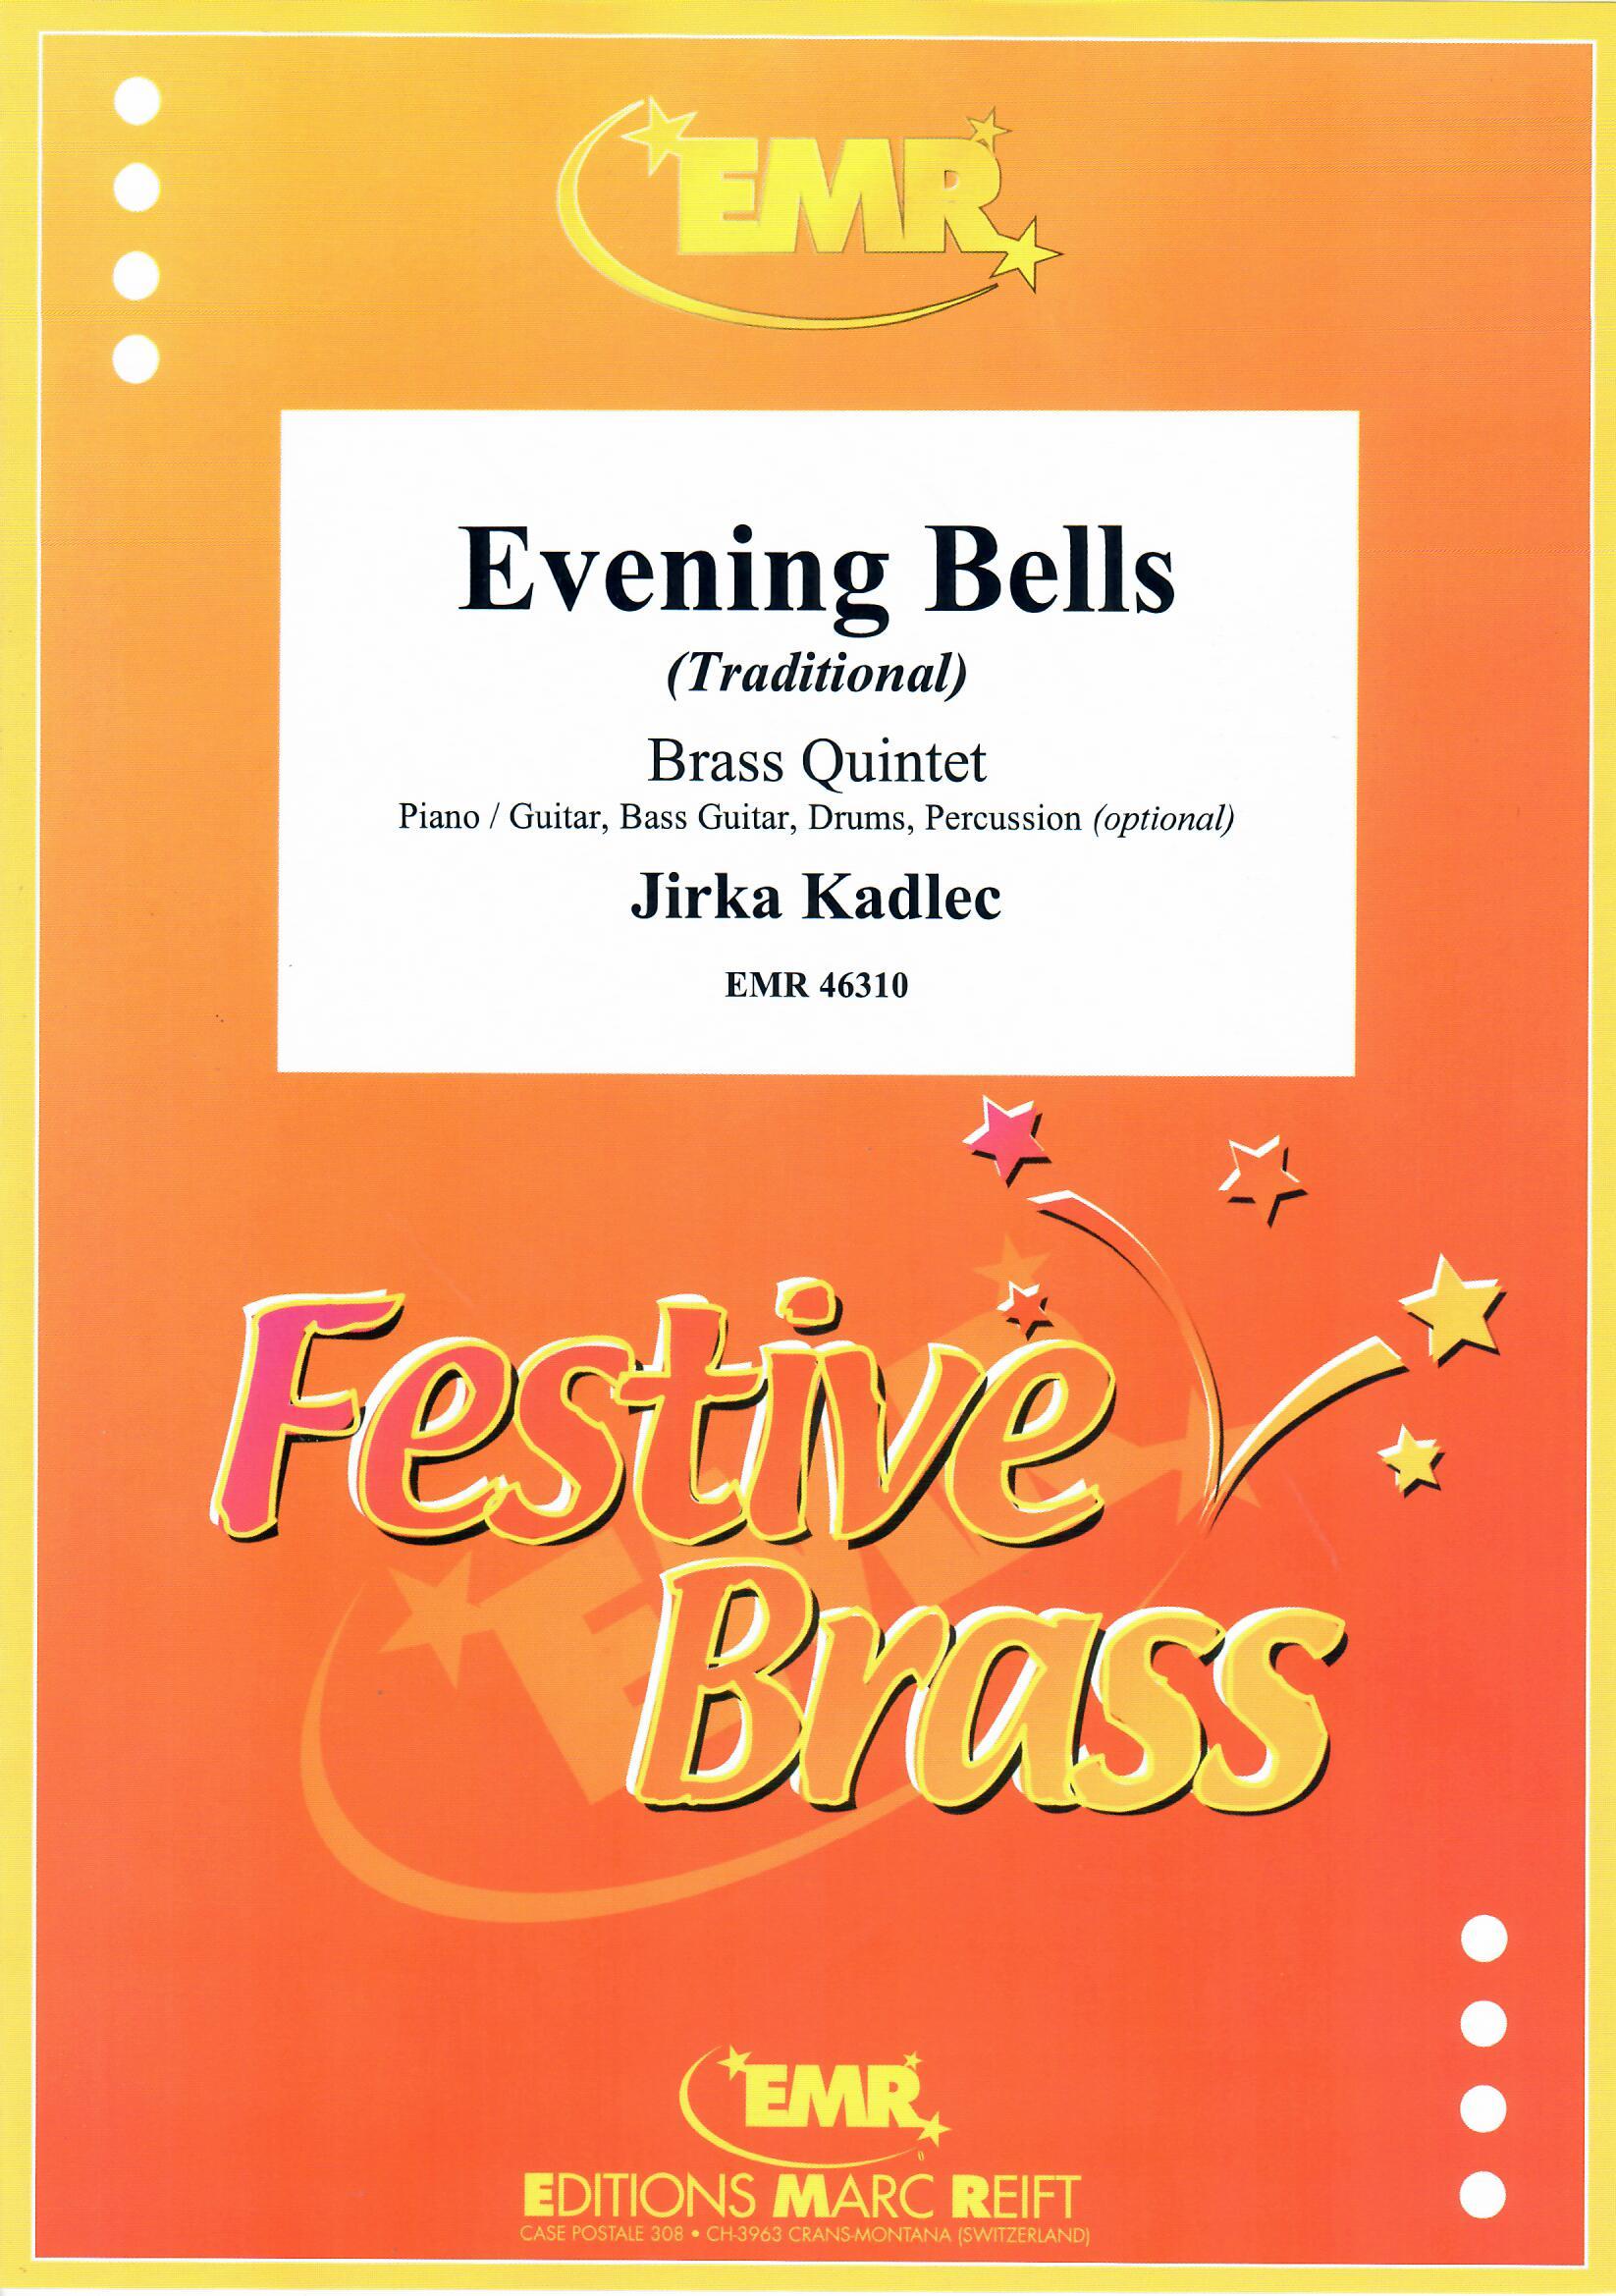 EVENING BELLS - Quartet, EMR Brass Quartets